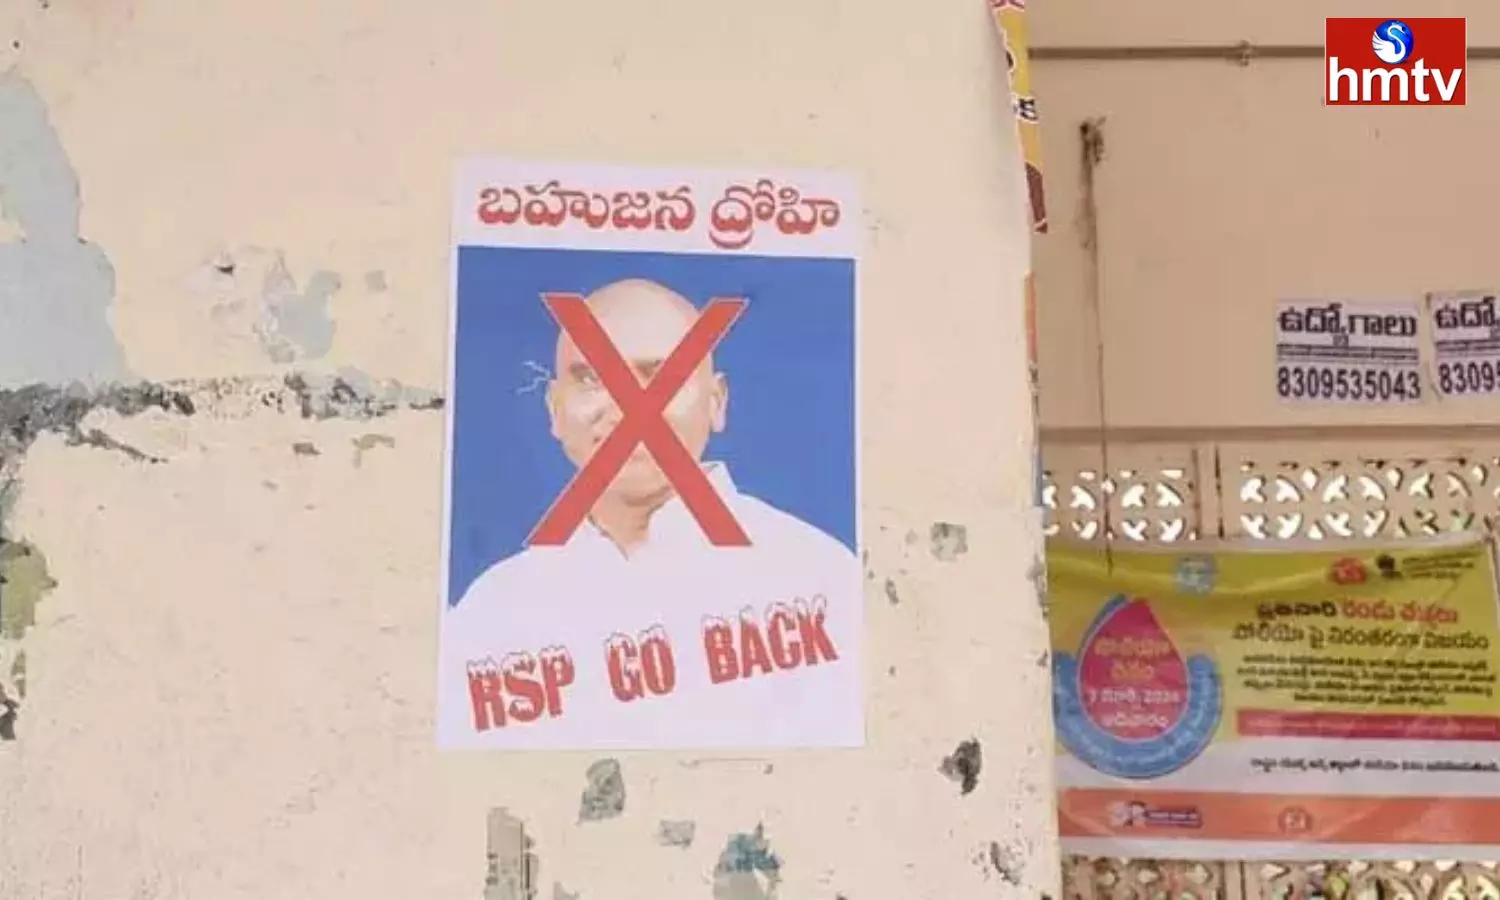 Against Posters On RS Praveen Kumar Bahujan Drohi Go Back